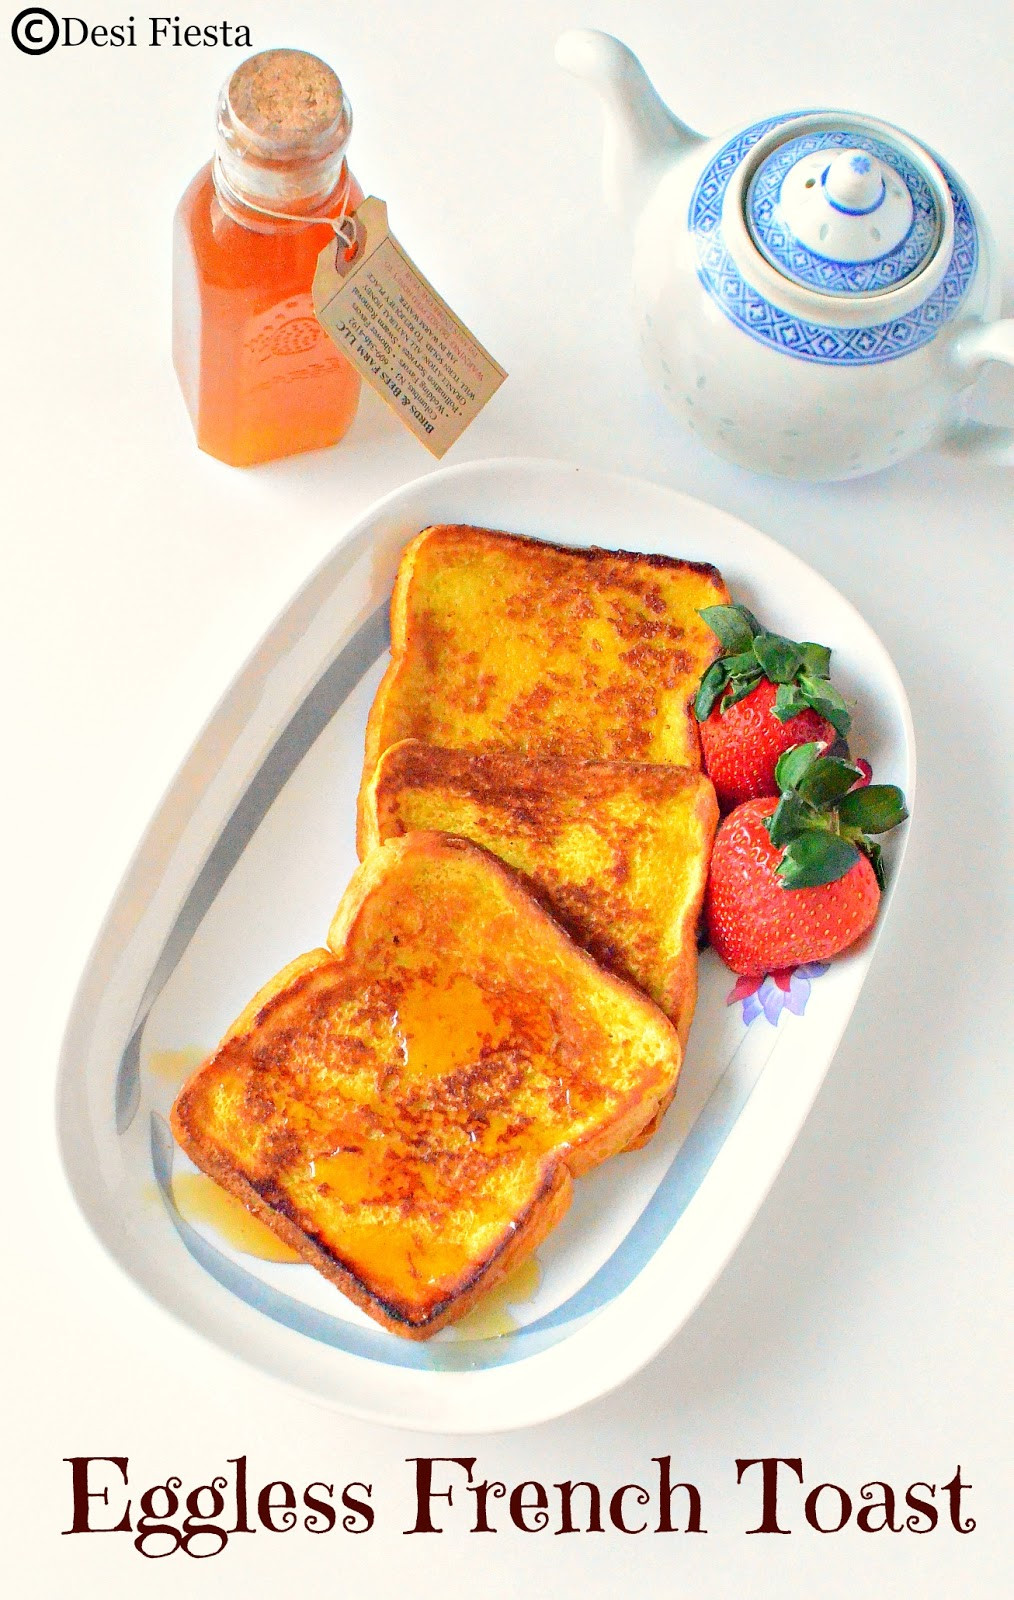 French toast Recipe without Egg Elegant Desi Fiesta Eggless French toast